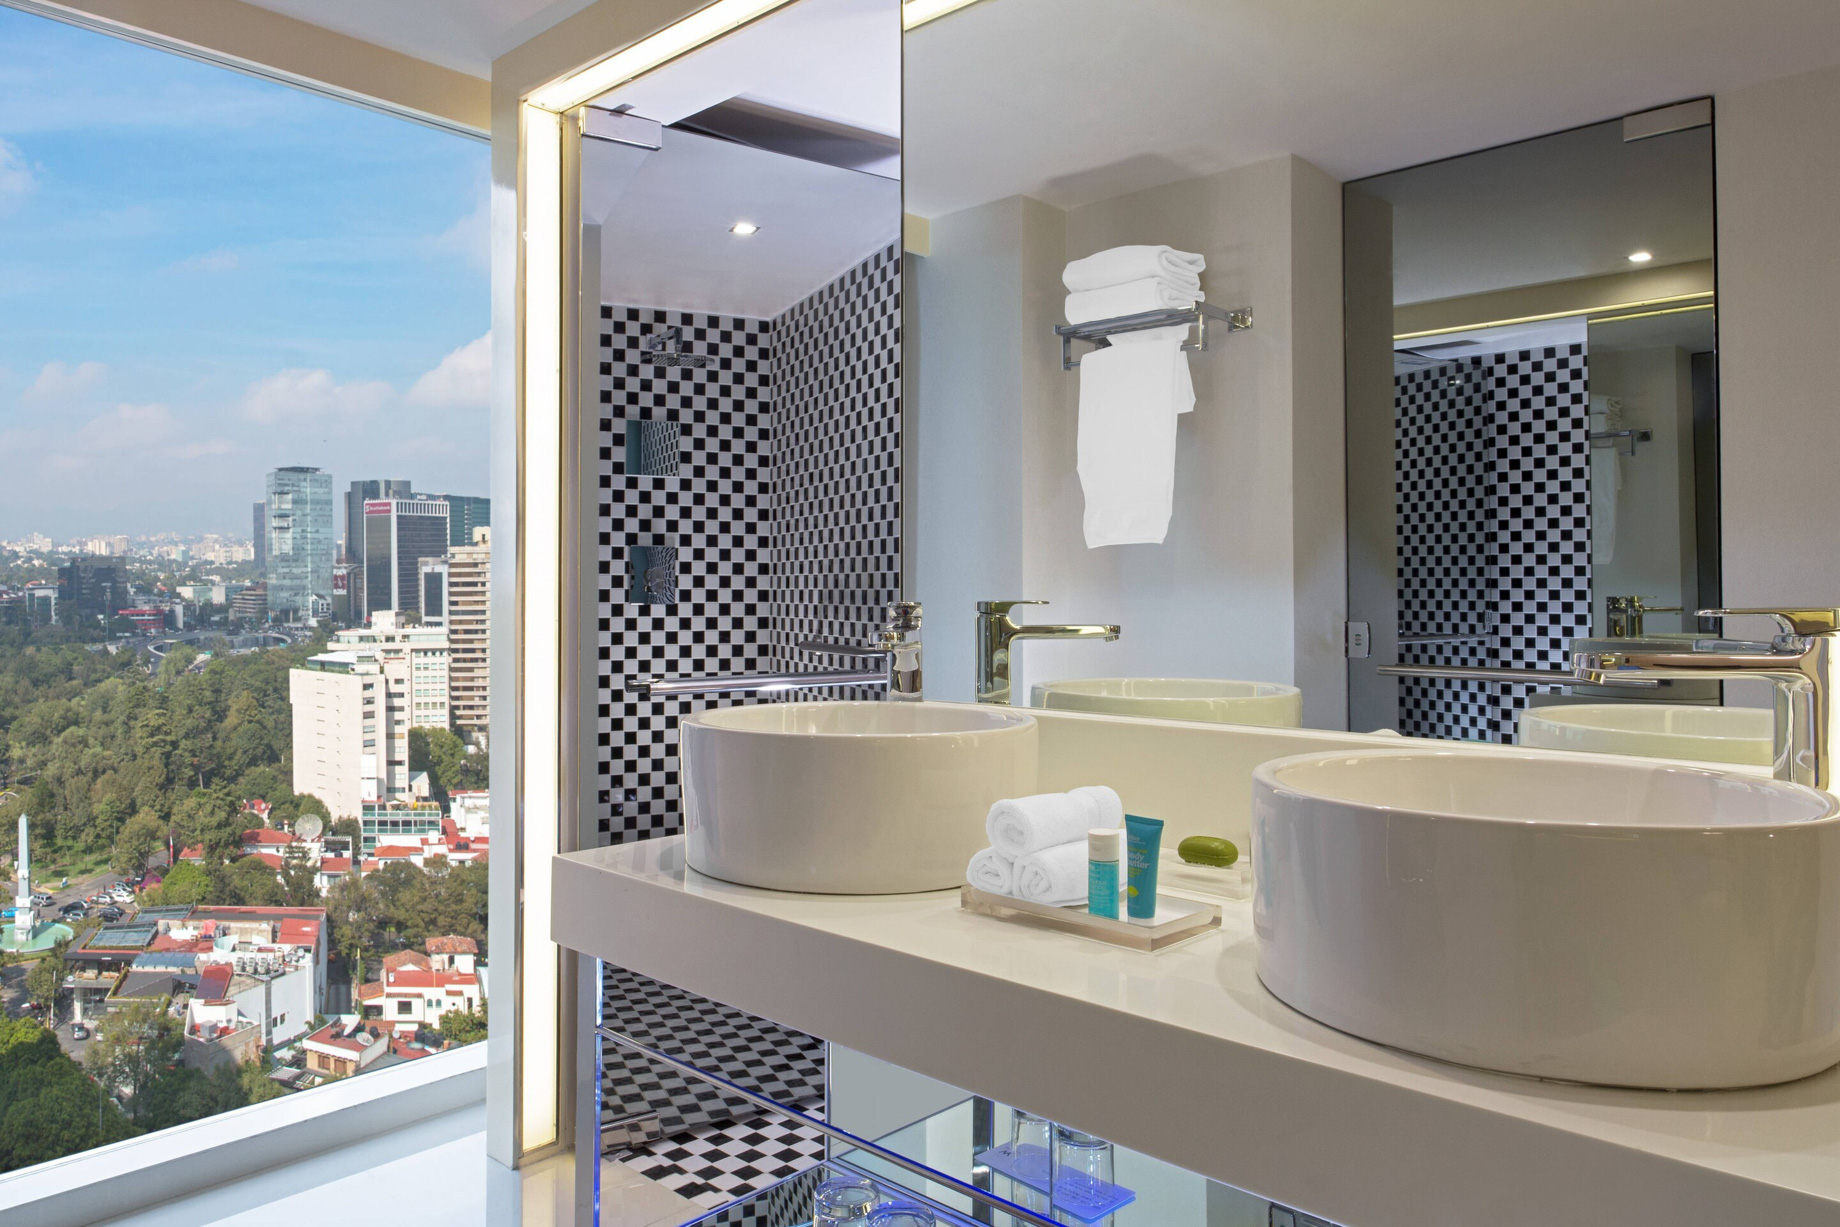 W Mexico City Hotel – Polanco, Mexico City, Mexico – Guest Bathroom Walk In Shower